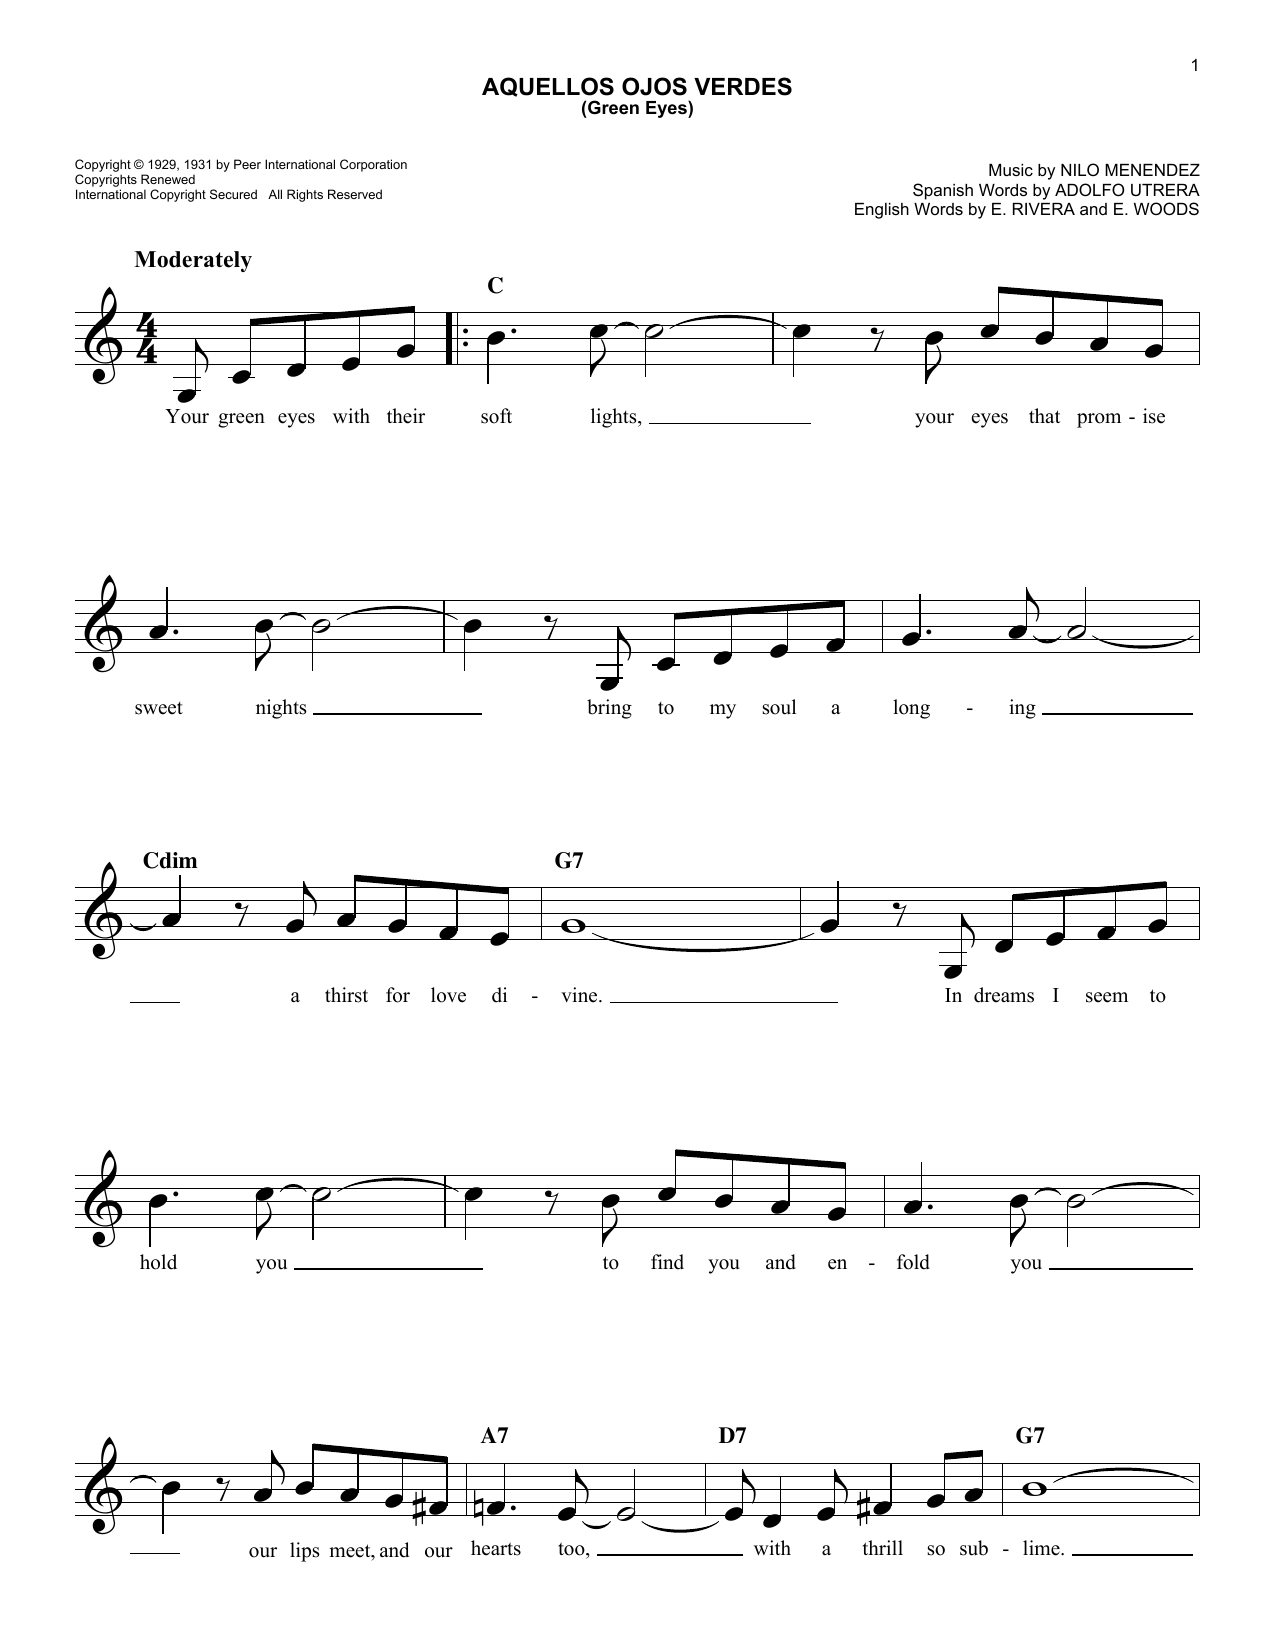 Adolfo Utrera Aquellos Ojos Verdes (Green Eyes) Sheet Music Notes & Chords for Melody Line, Lyrics & Chords - Download or Print PDF